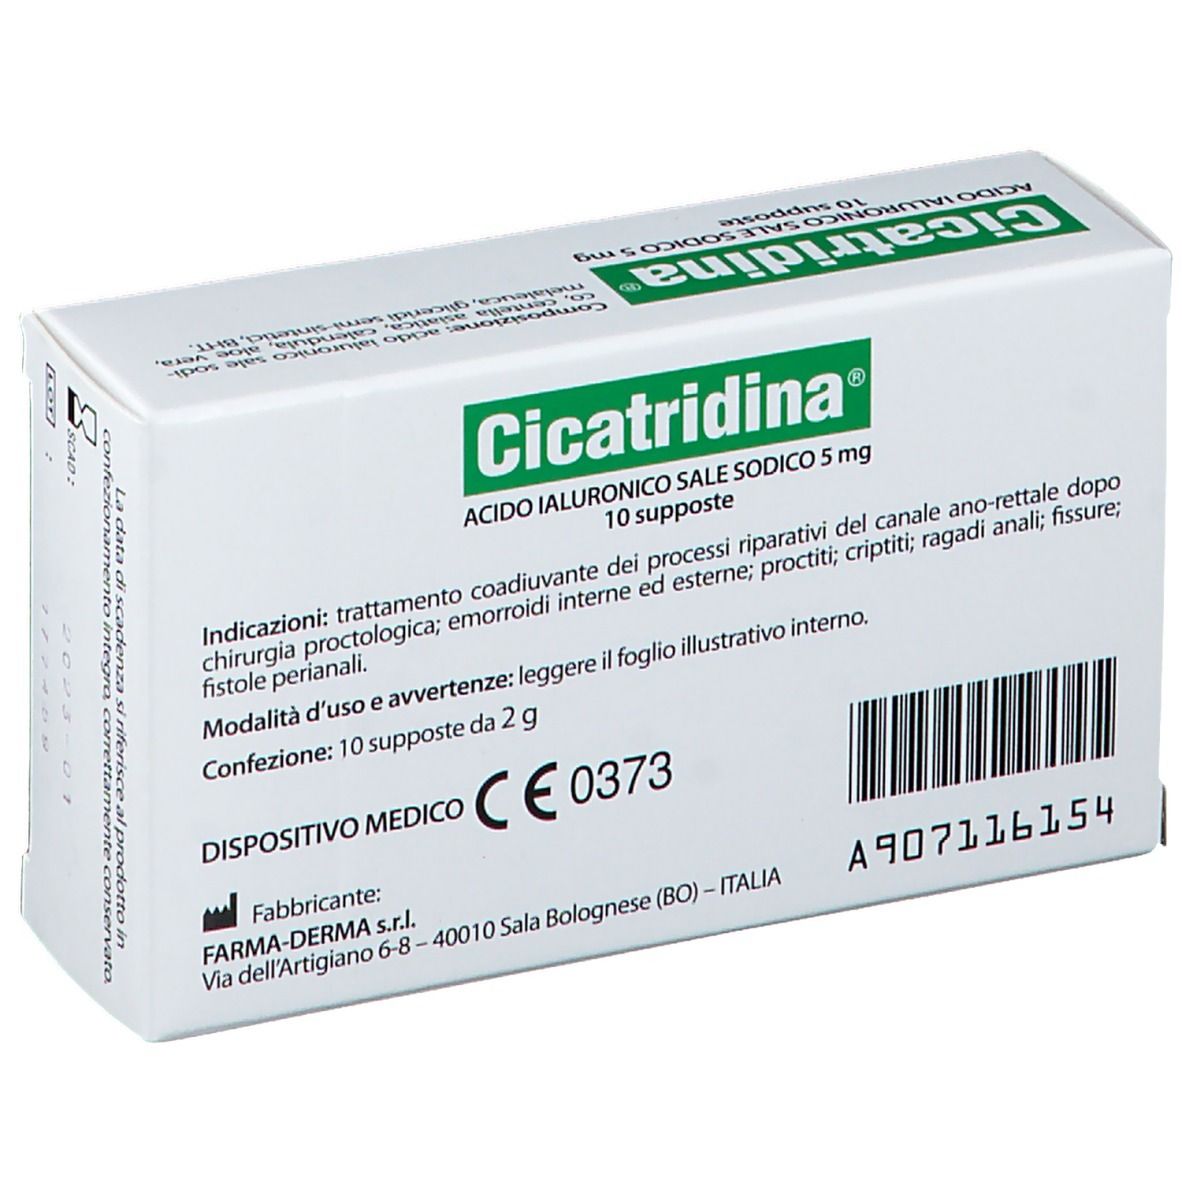 Cicatridina® Supposte